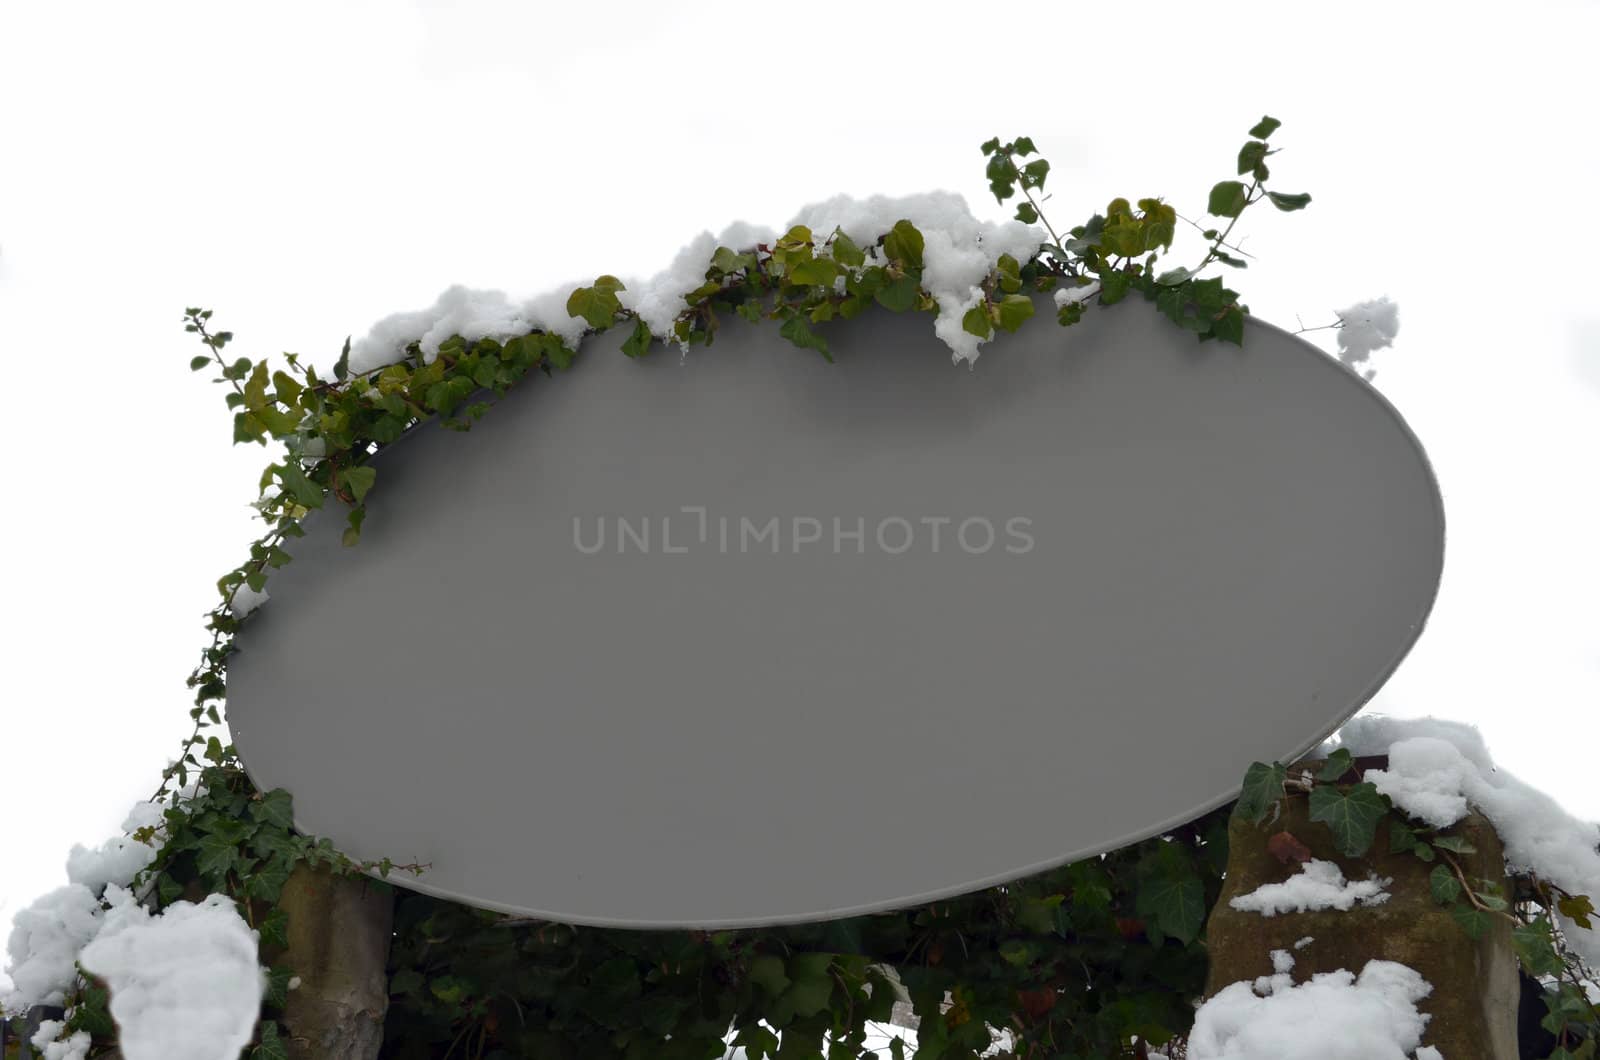 Blank metal sign under snow by artofphoto